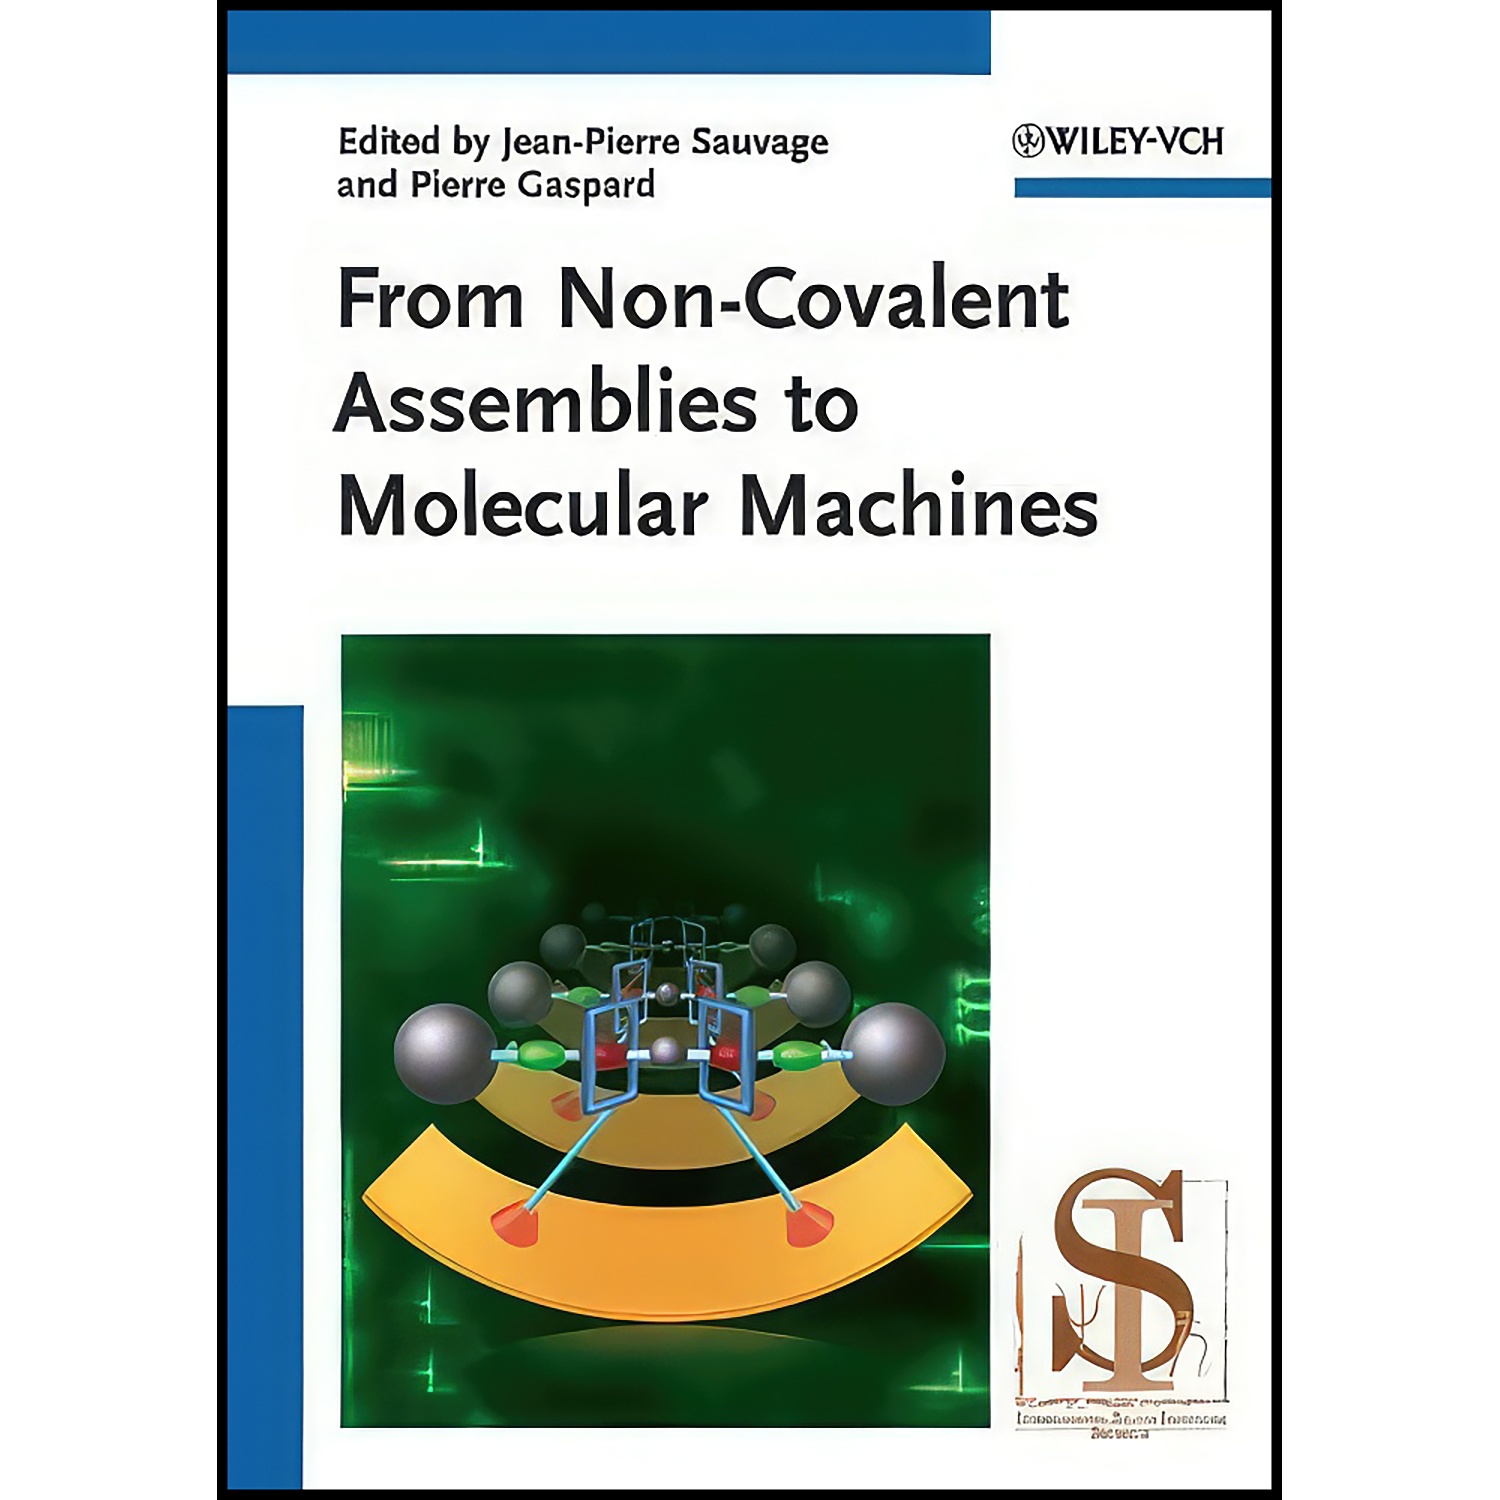 کتاب From Non-Covalent Assemblies to Molecular Machines اثر جمعي از نويسندگان انتشارات Wiley-VCH